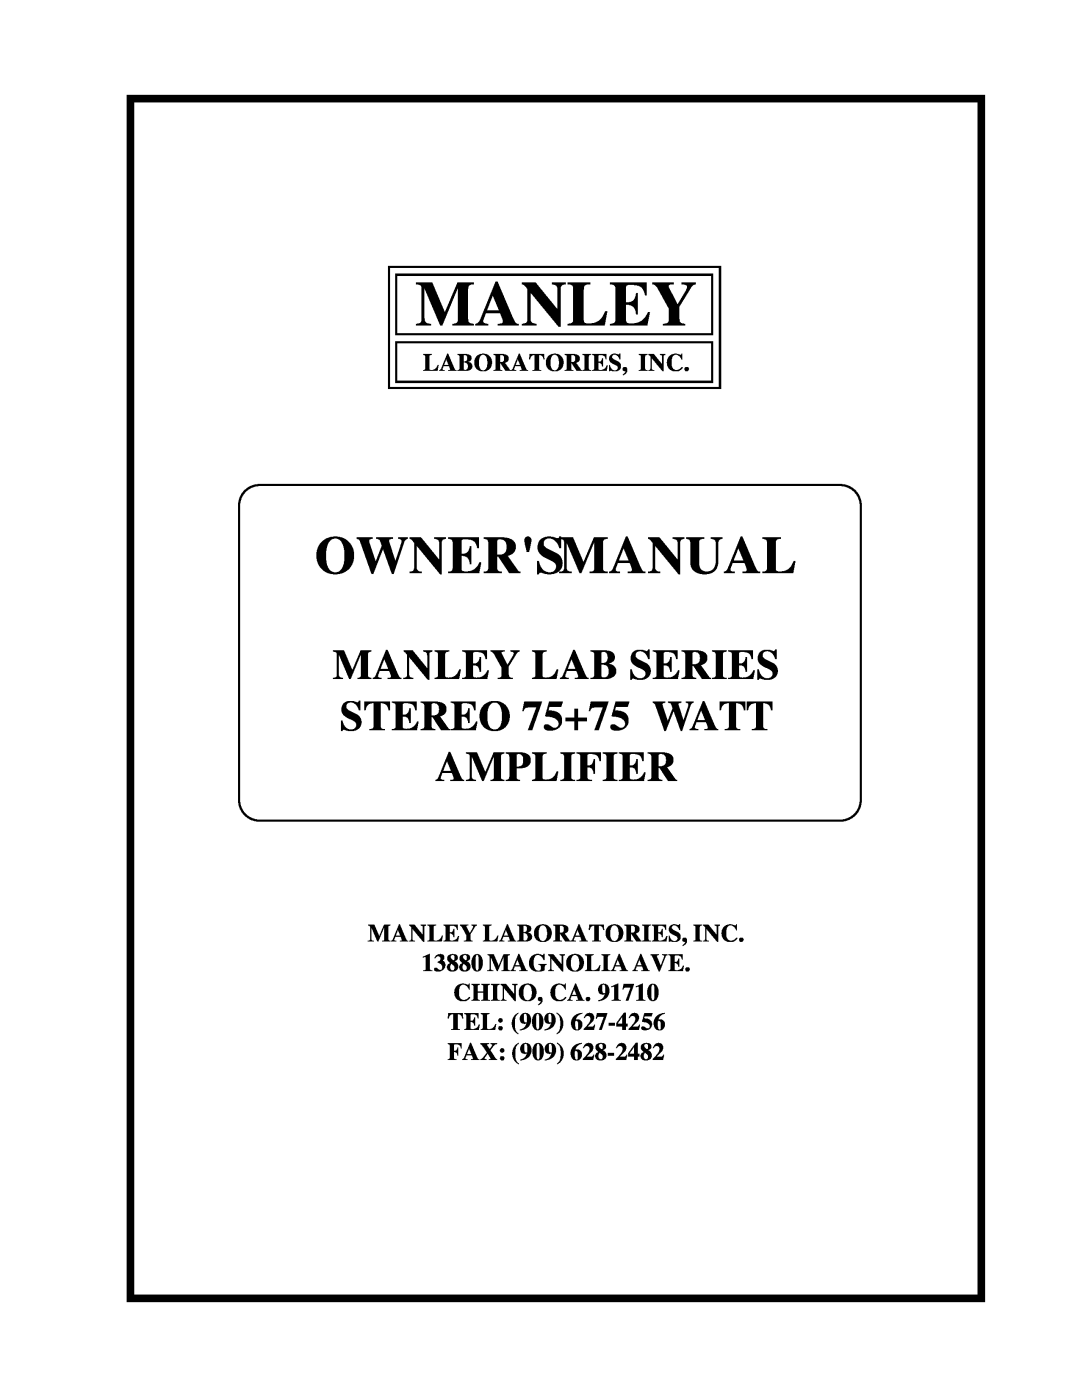 Manley Labs owner manual Manley, Ownersmanual, MANLEY LAB SERIES STEREO 75+75 WATT AMPLIFIER, Laboratories, Inc 